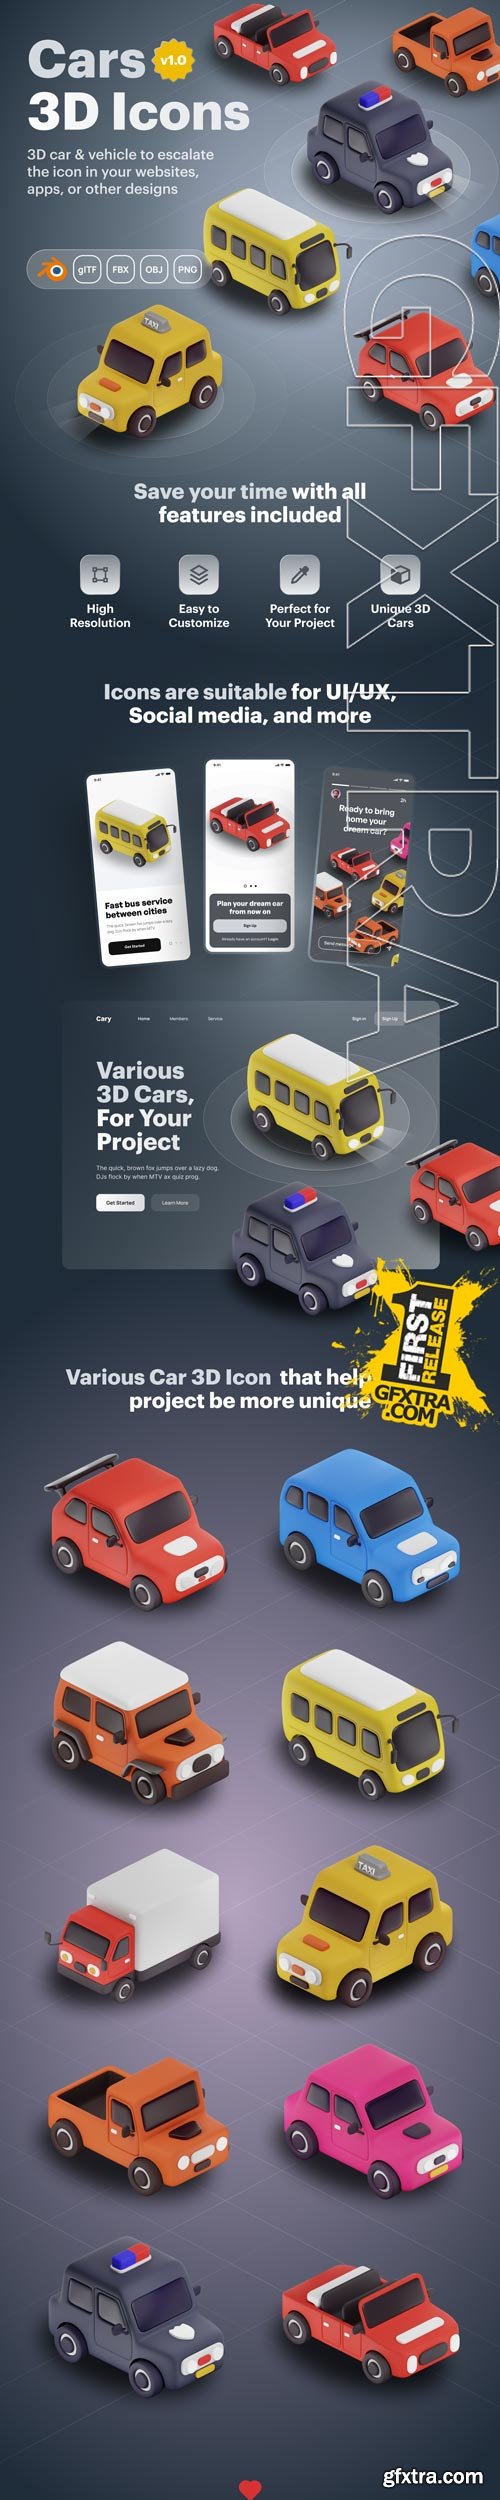 Carly - Car & Vehicle 3D Icon Set Model